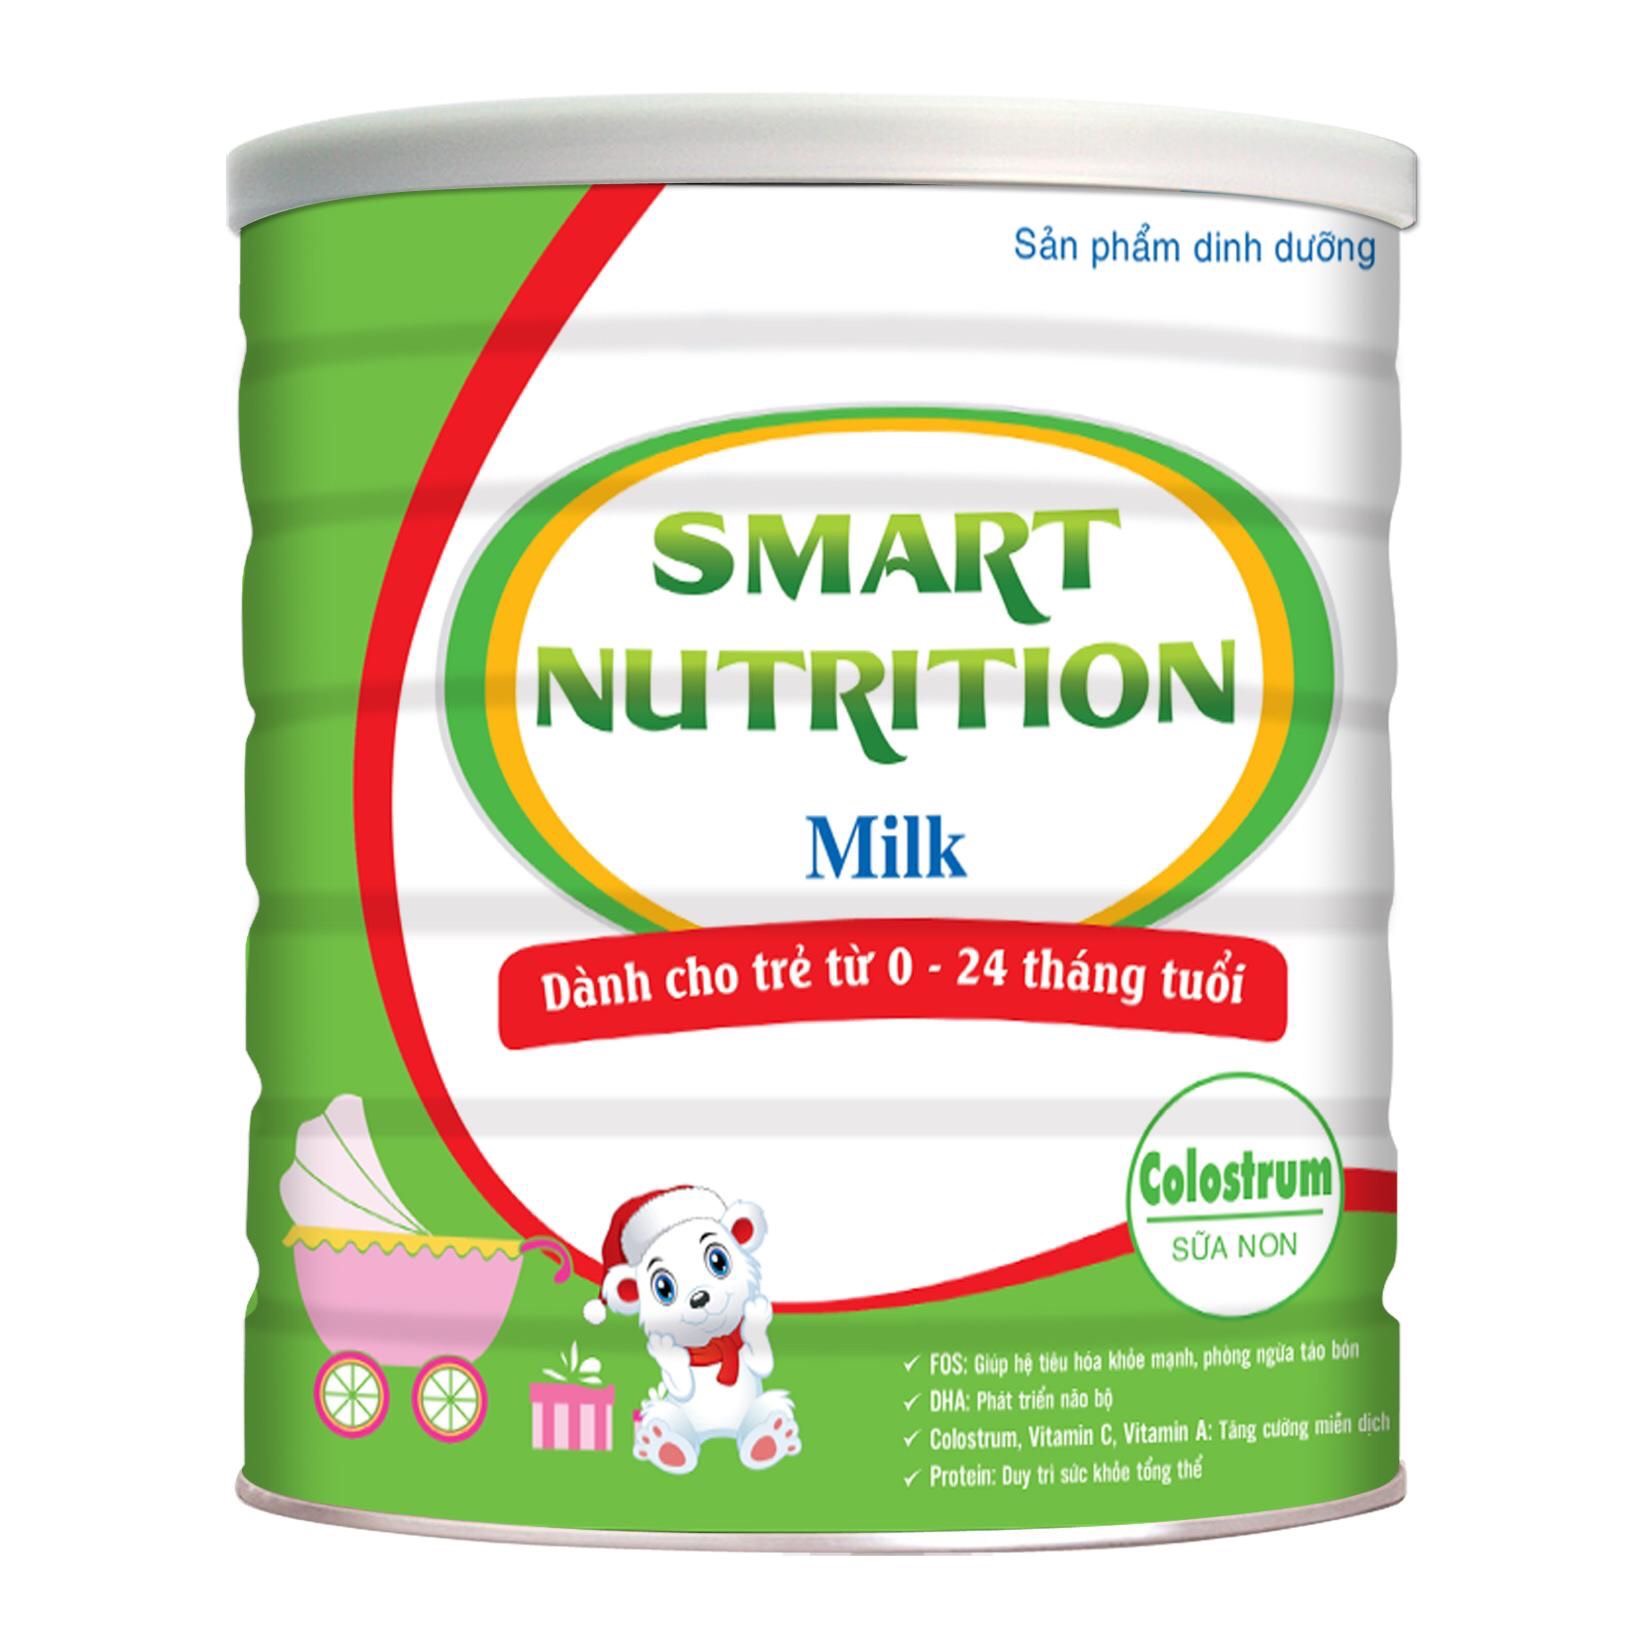 SMART NUTRITION MILK 400g